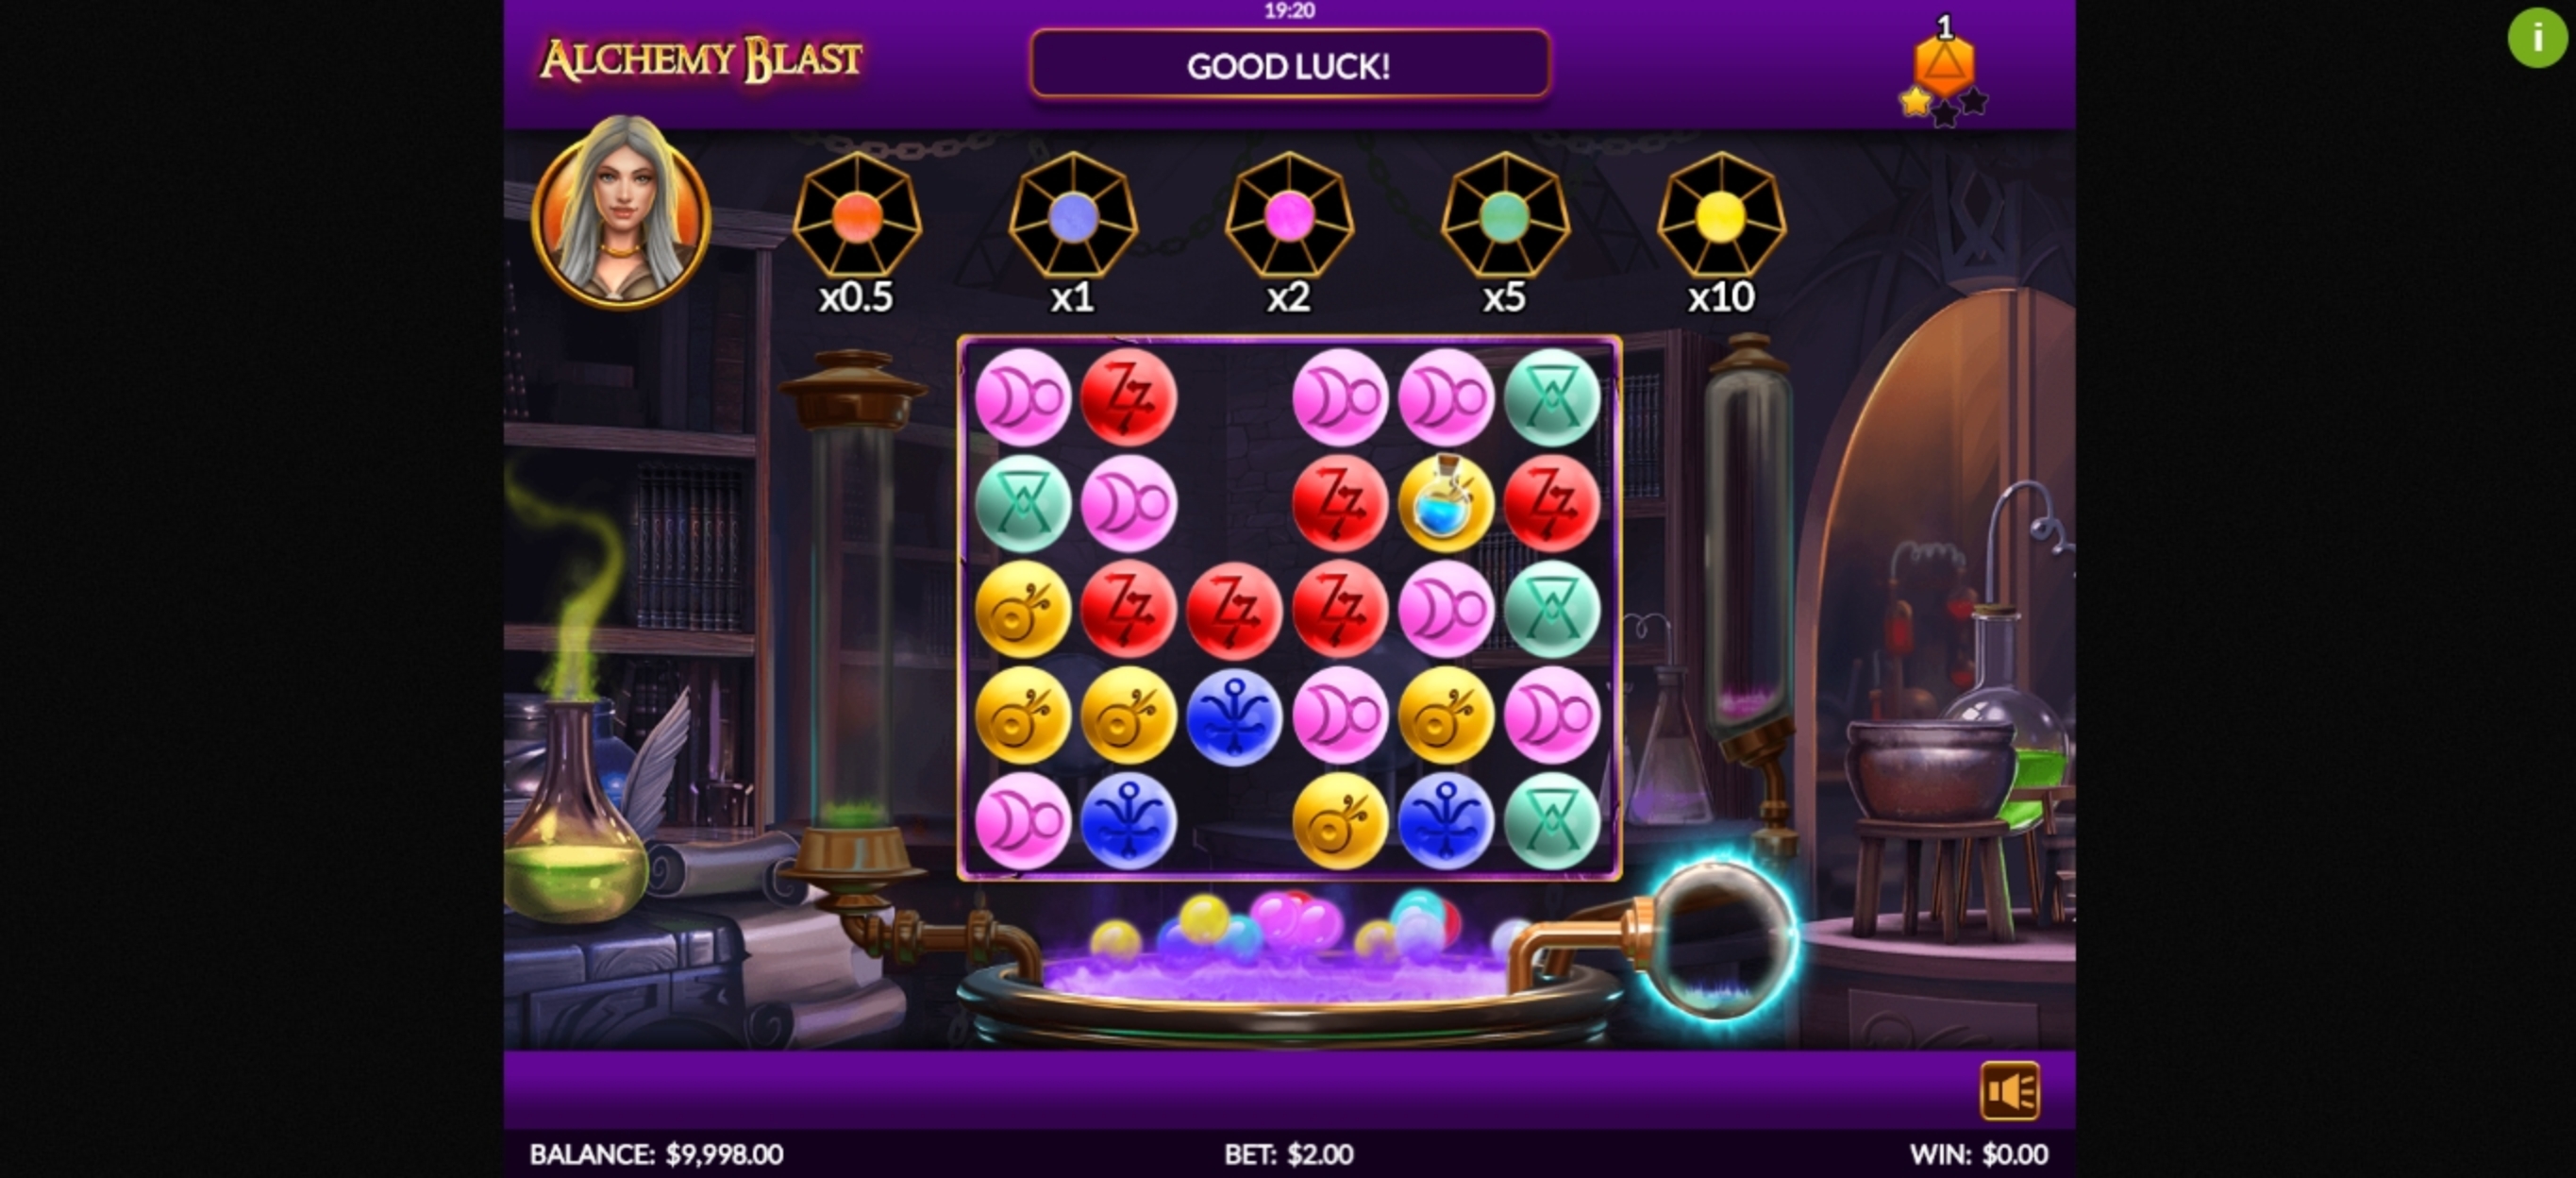 Win Money in Alchemy Blast Free Slot Game by Skillzzgaming